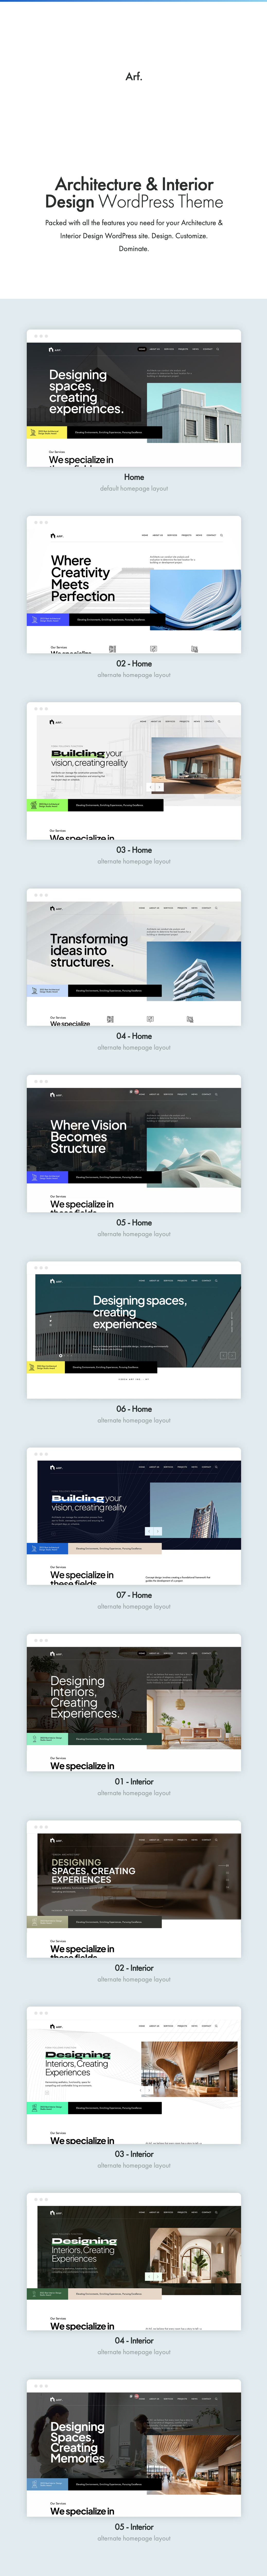 Arf - architecture & interior design theme by pixelwars